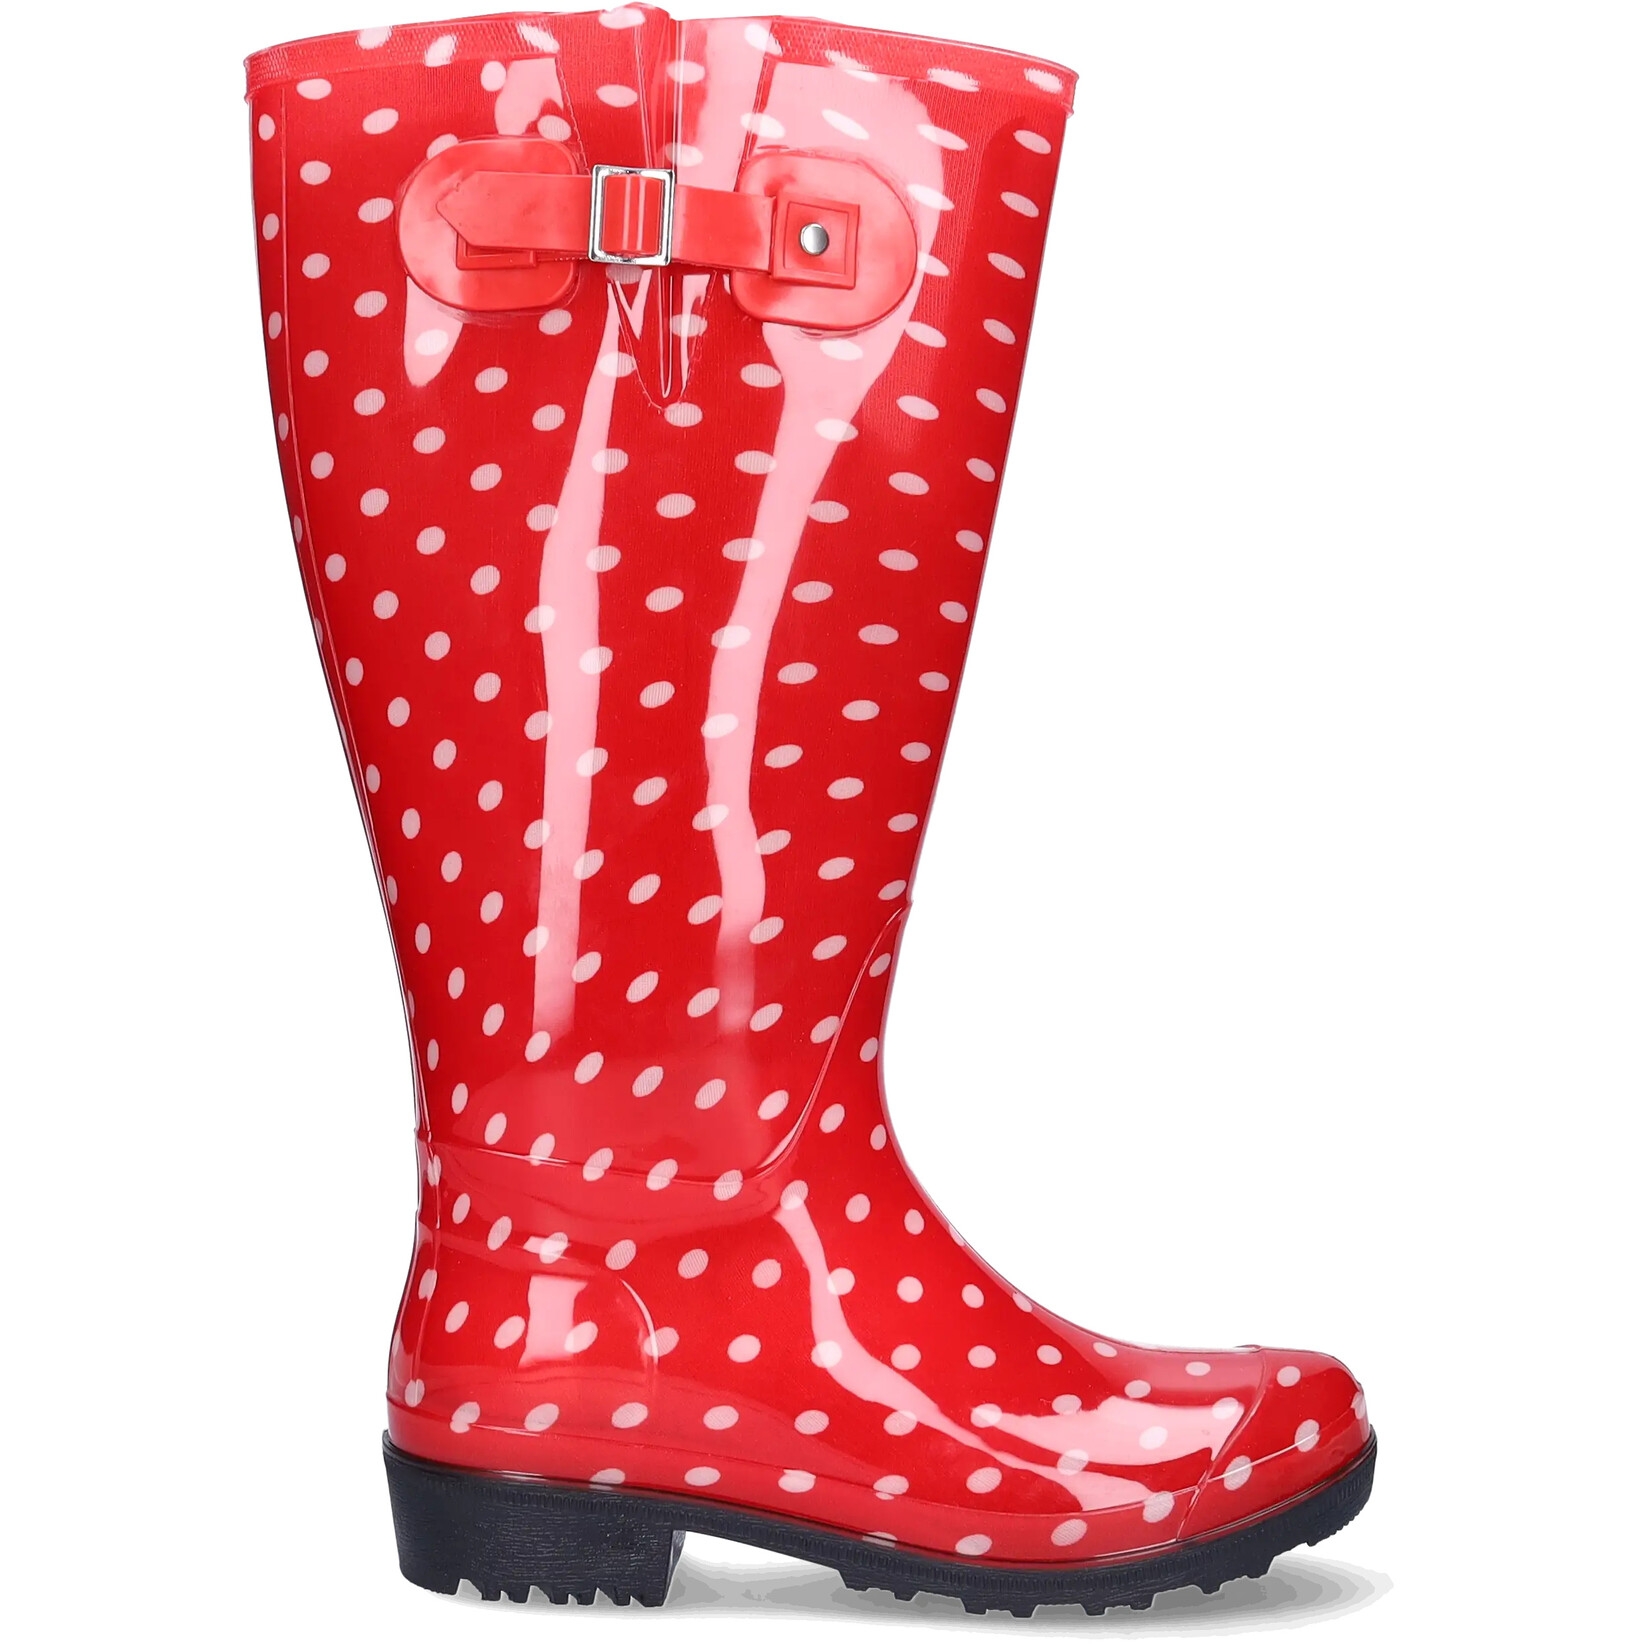 JJ Footwear Wellies - Rot/weiße Polka Dots